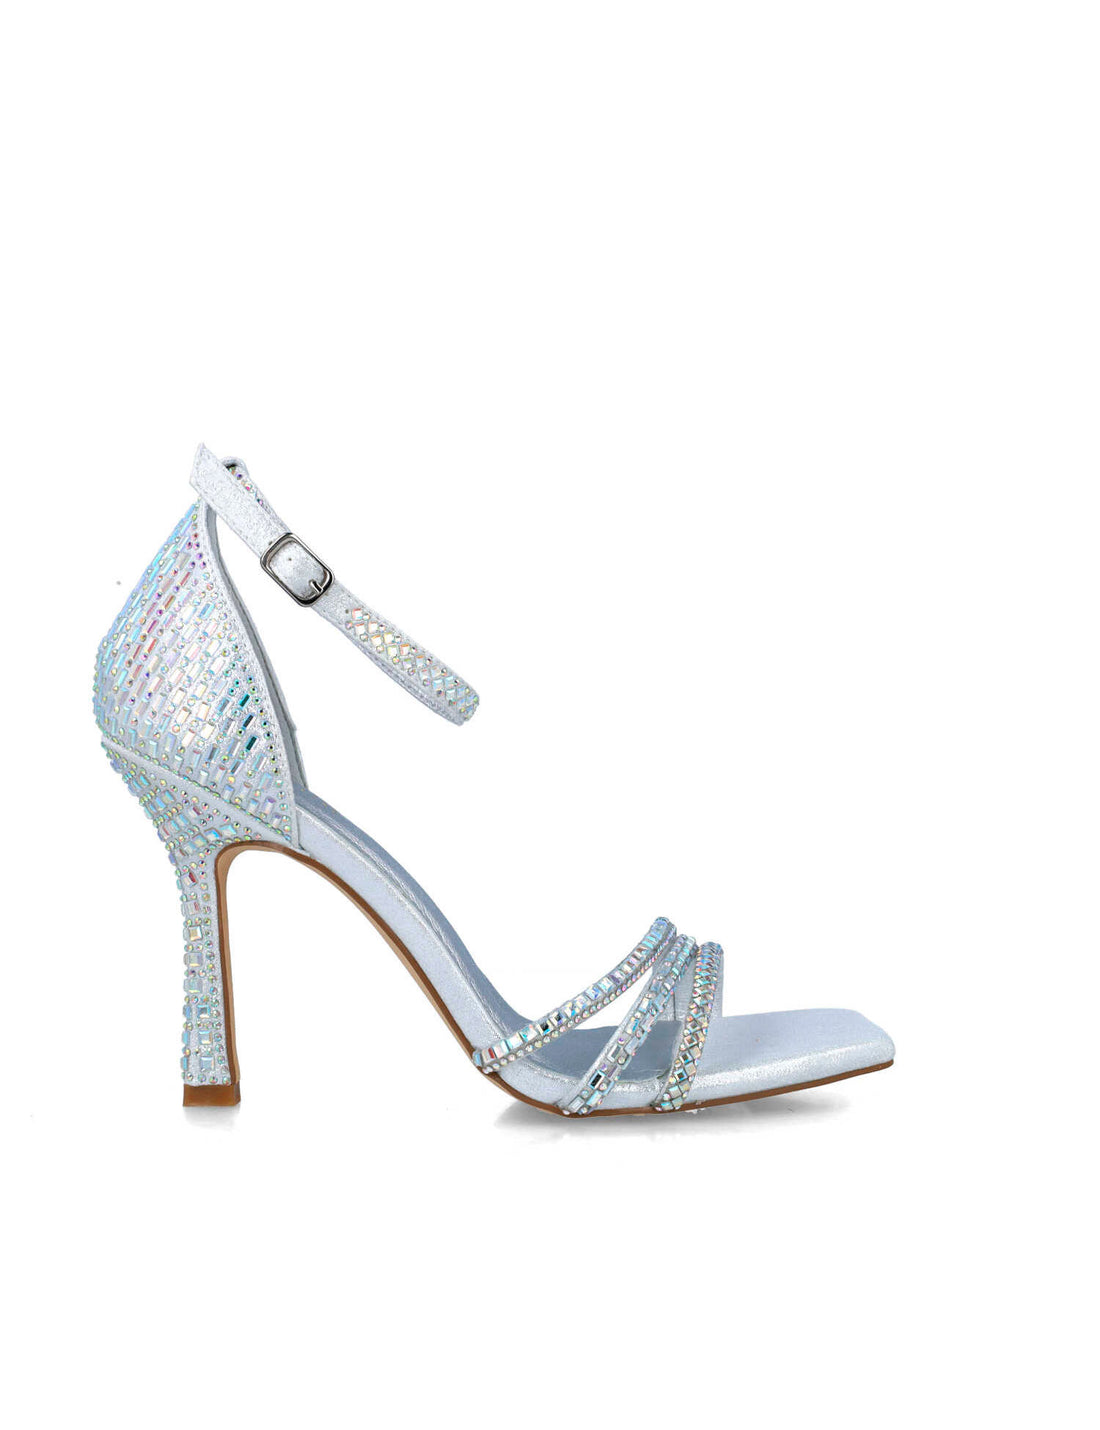 Silver Embellishd High-Heel Sandals_24736_09_01